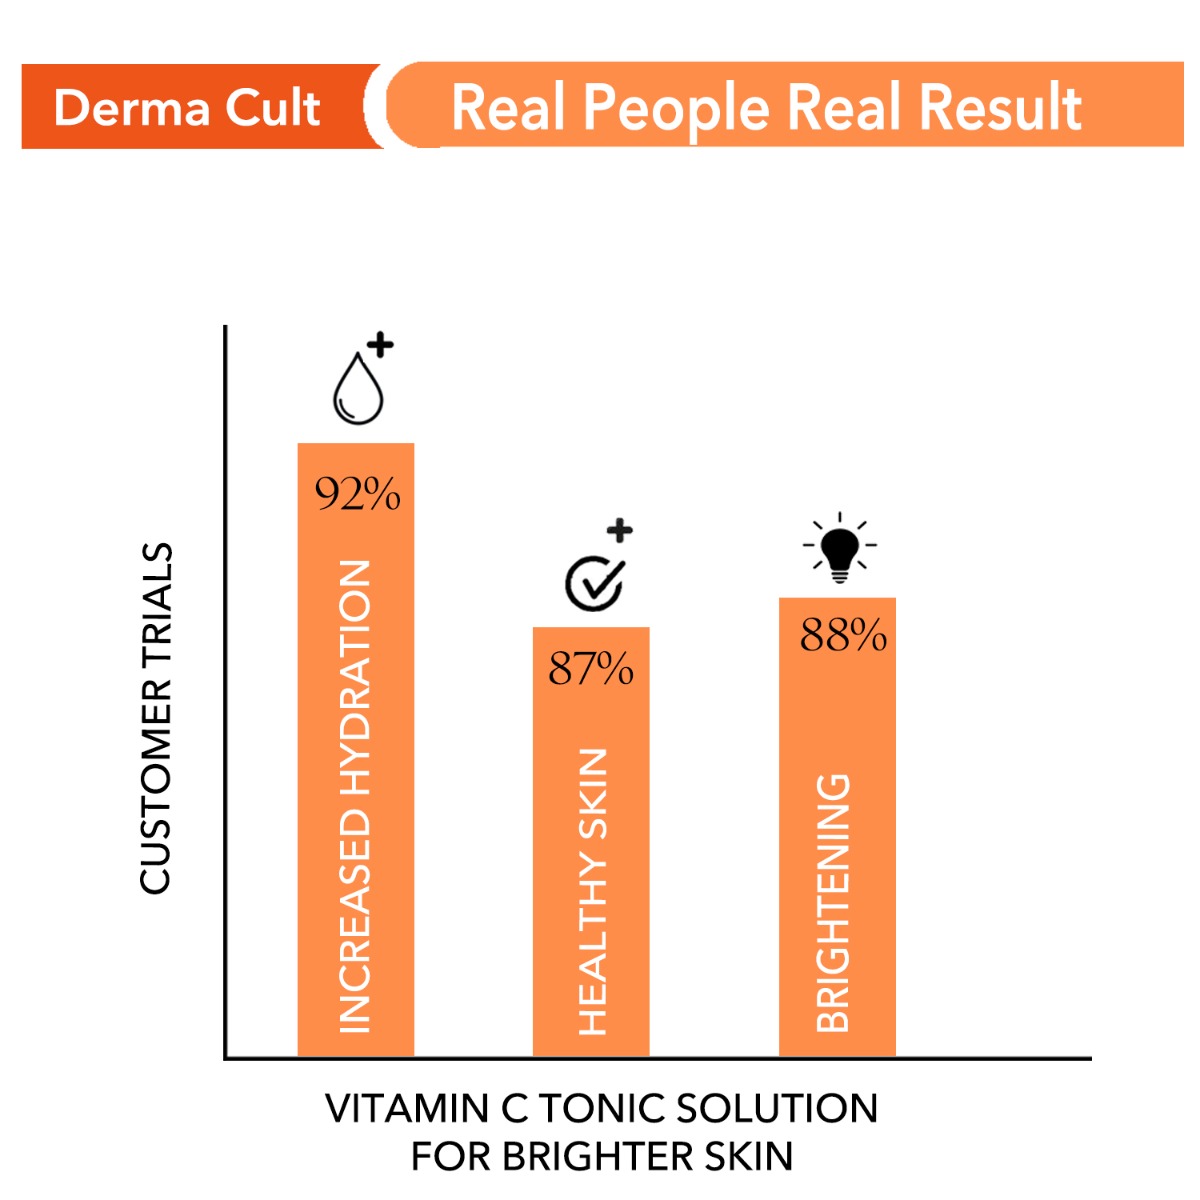 Derma Cult Vitamin C Tonic Solution For Skin Radiance (200ml)